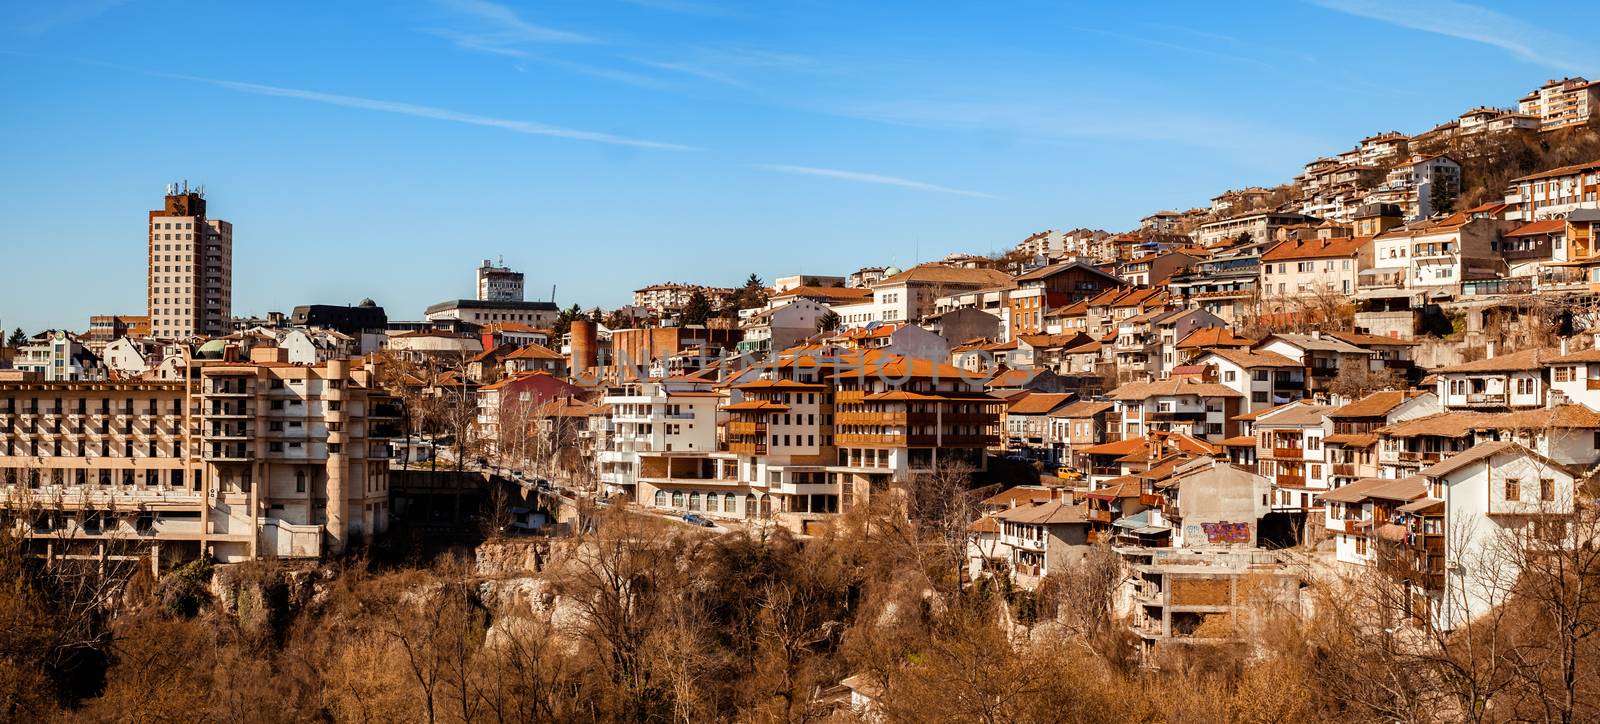 Panoramic view over the city Veliko Tarnovo, Bulgaria by Roberto